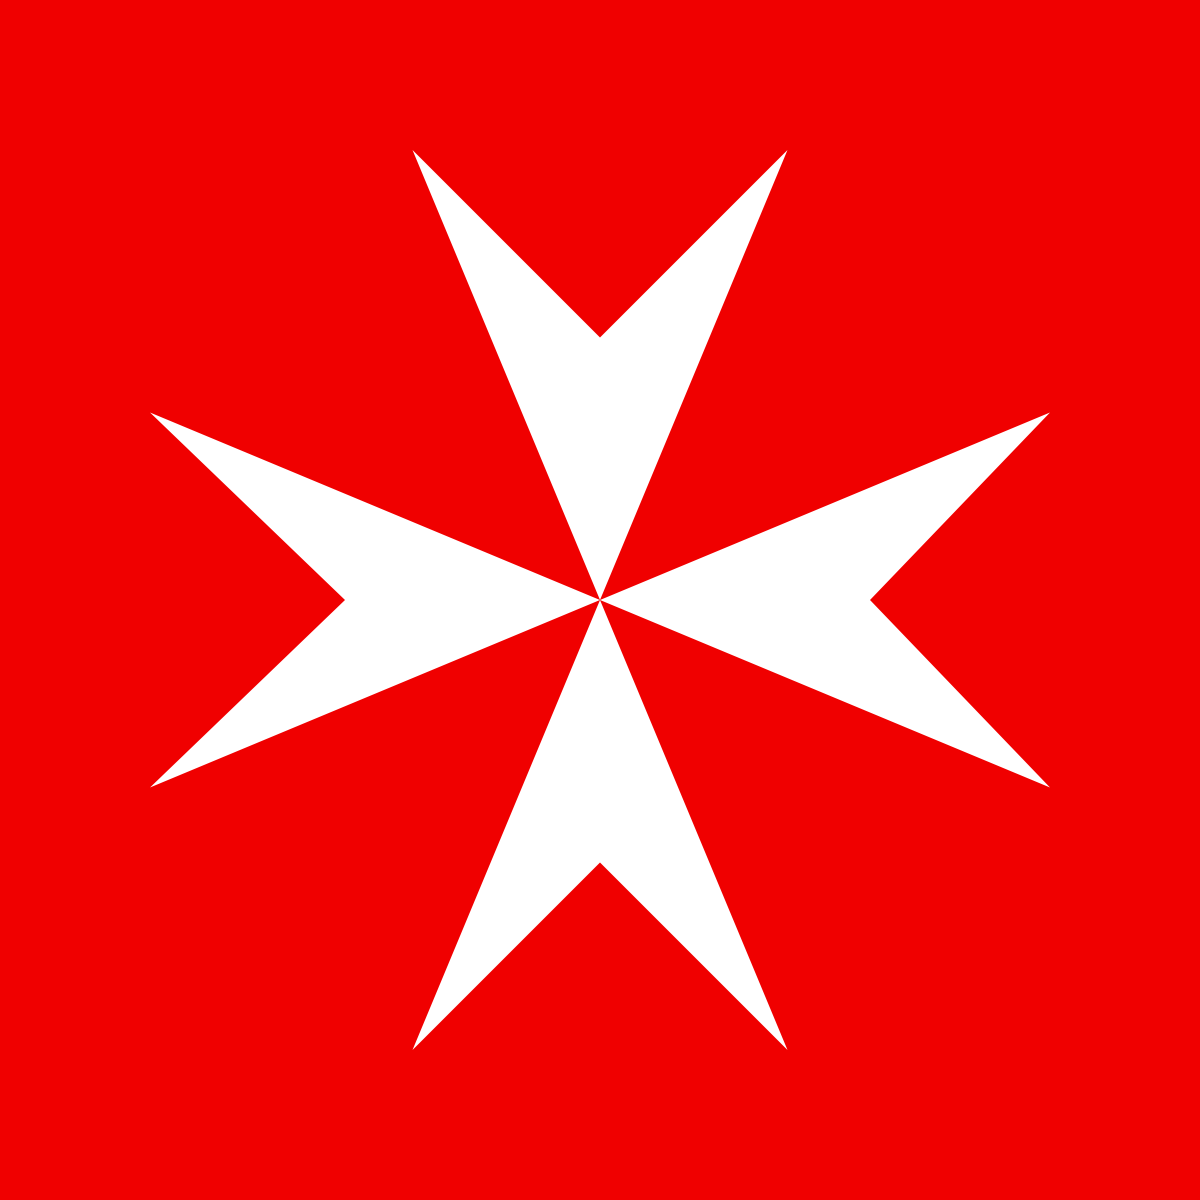 White and Red X Logo - Maltese cross